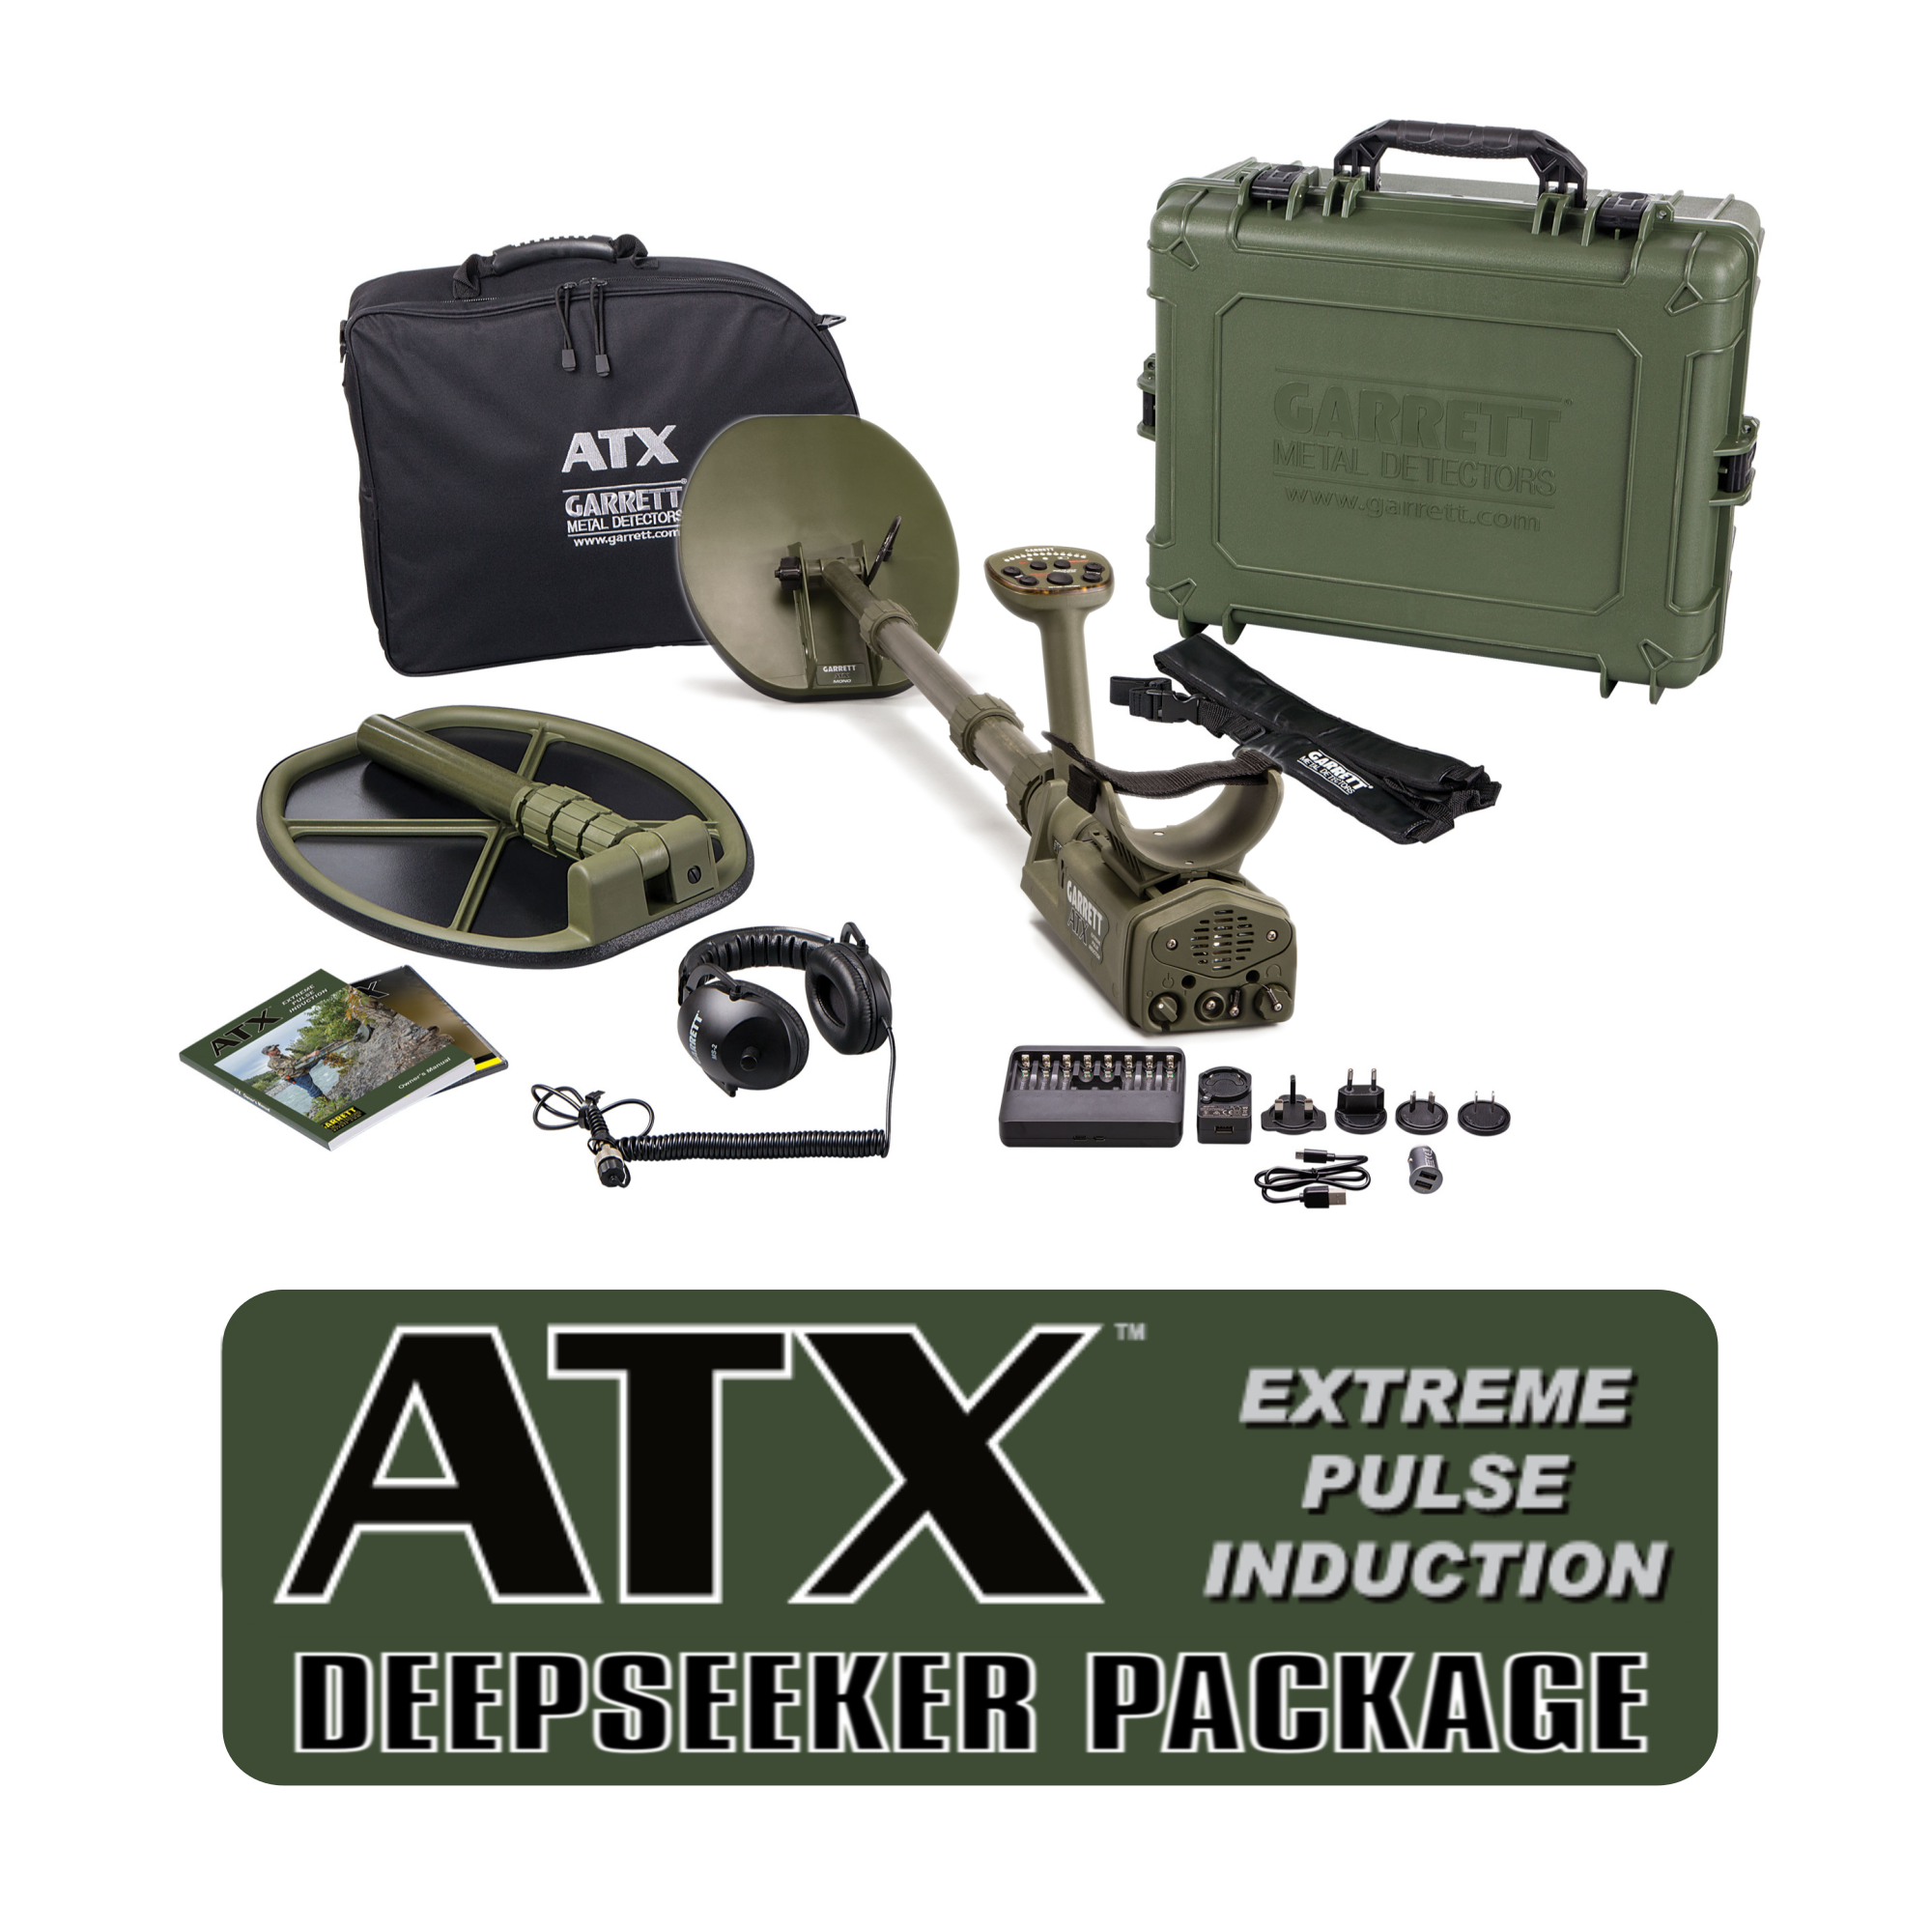 Garrett ATX Pro DeepSeeker Package Metal Detector